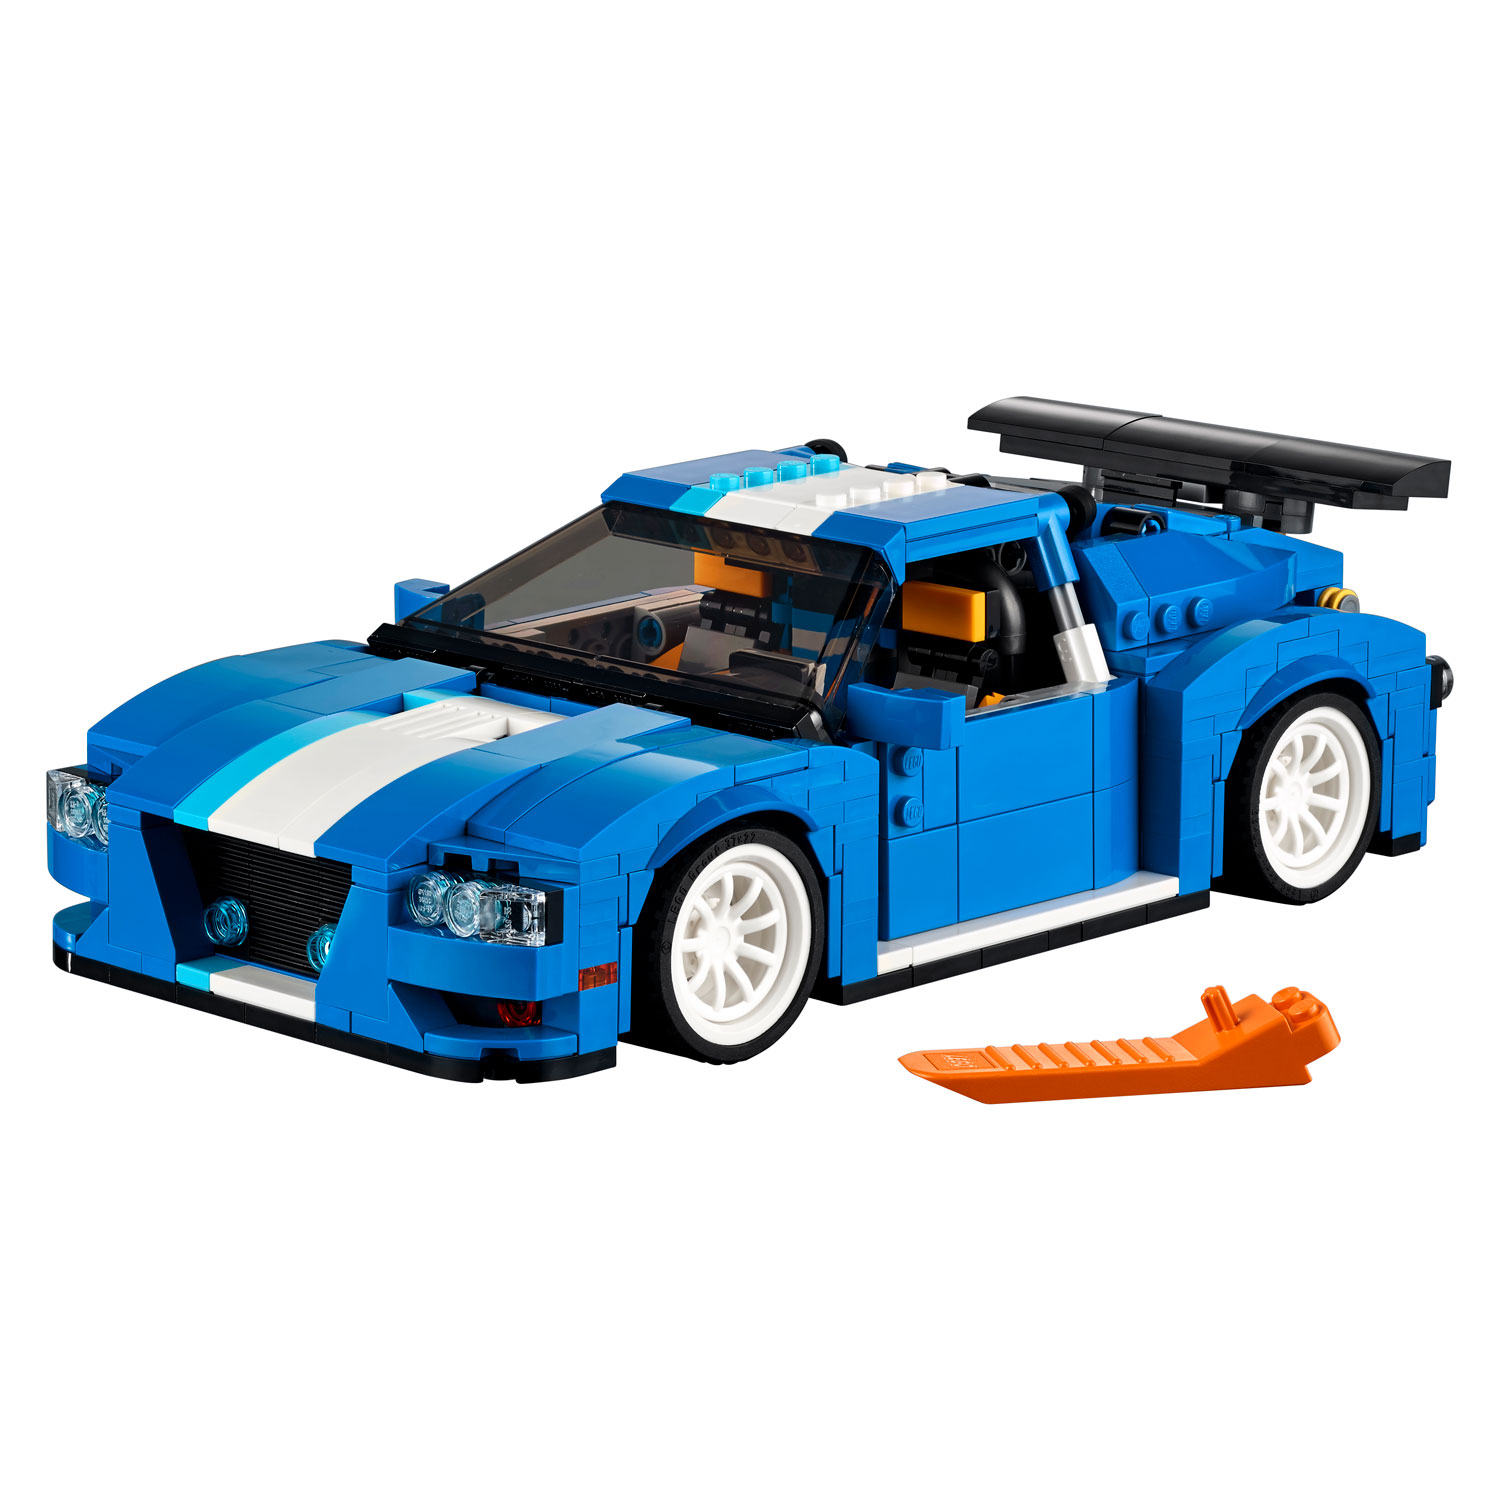 LEGO Creator 31070 Turbo Baanracer